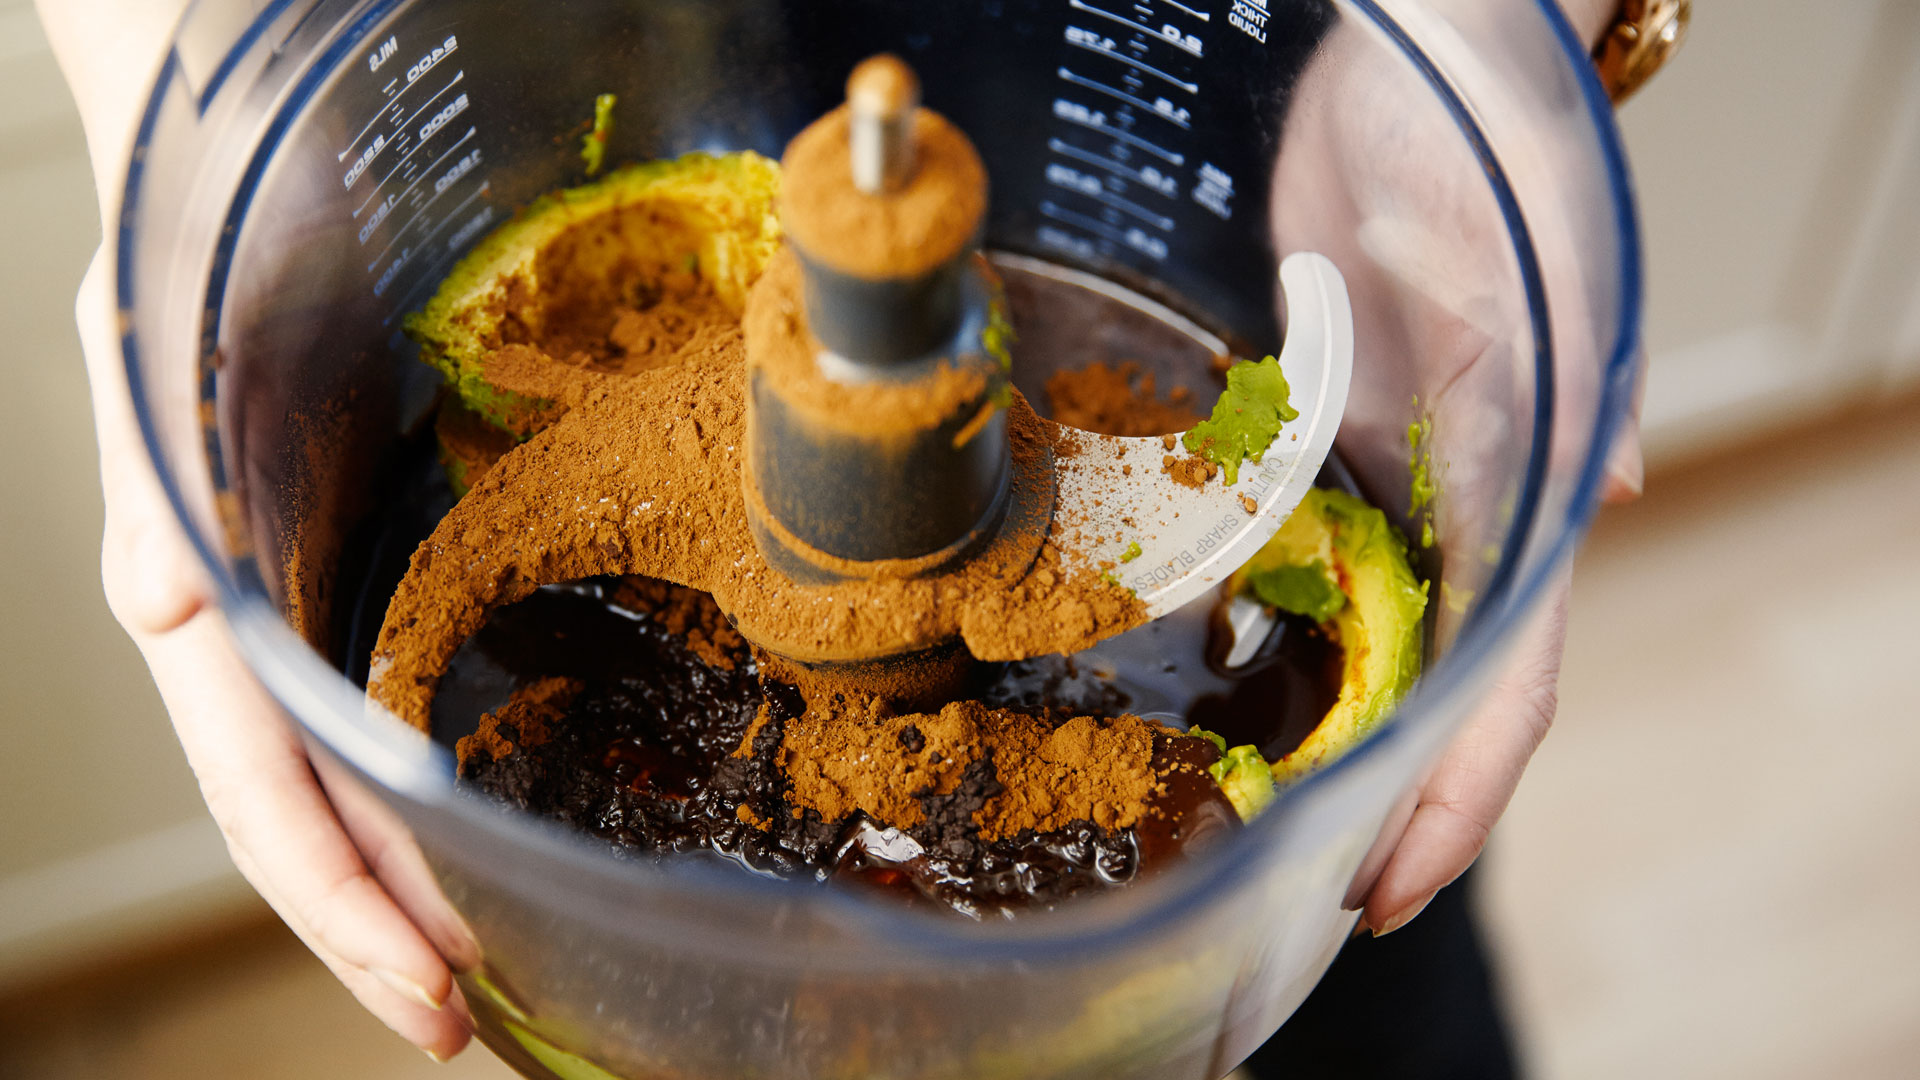 Ingredients for Karen Arkell's Chocolate Pecan Tart with Avocado recipe.